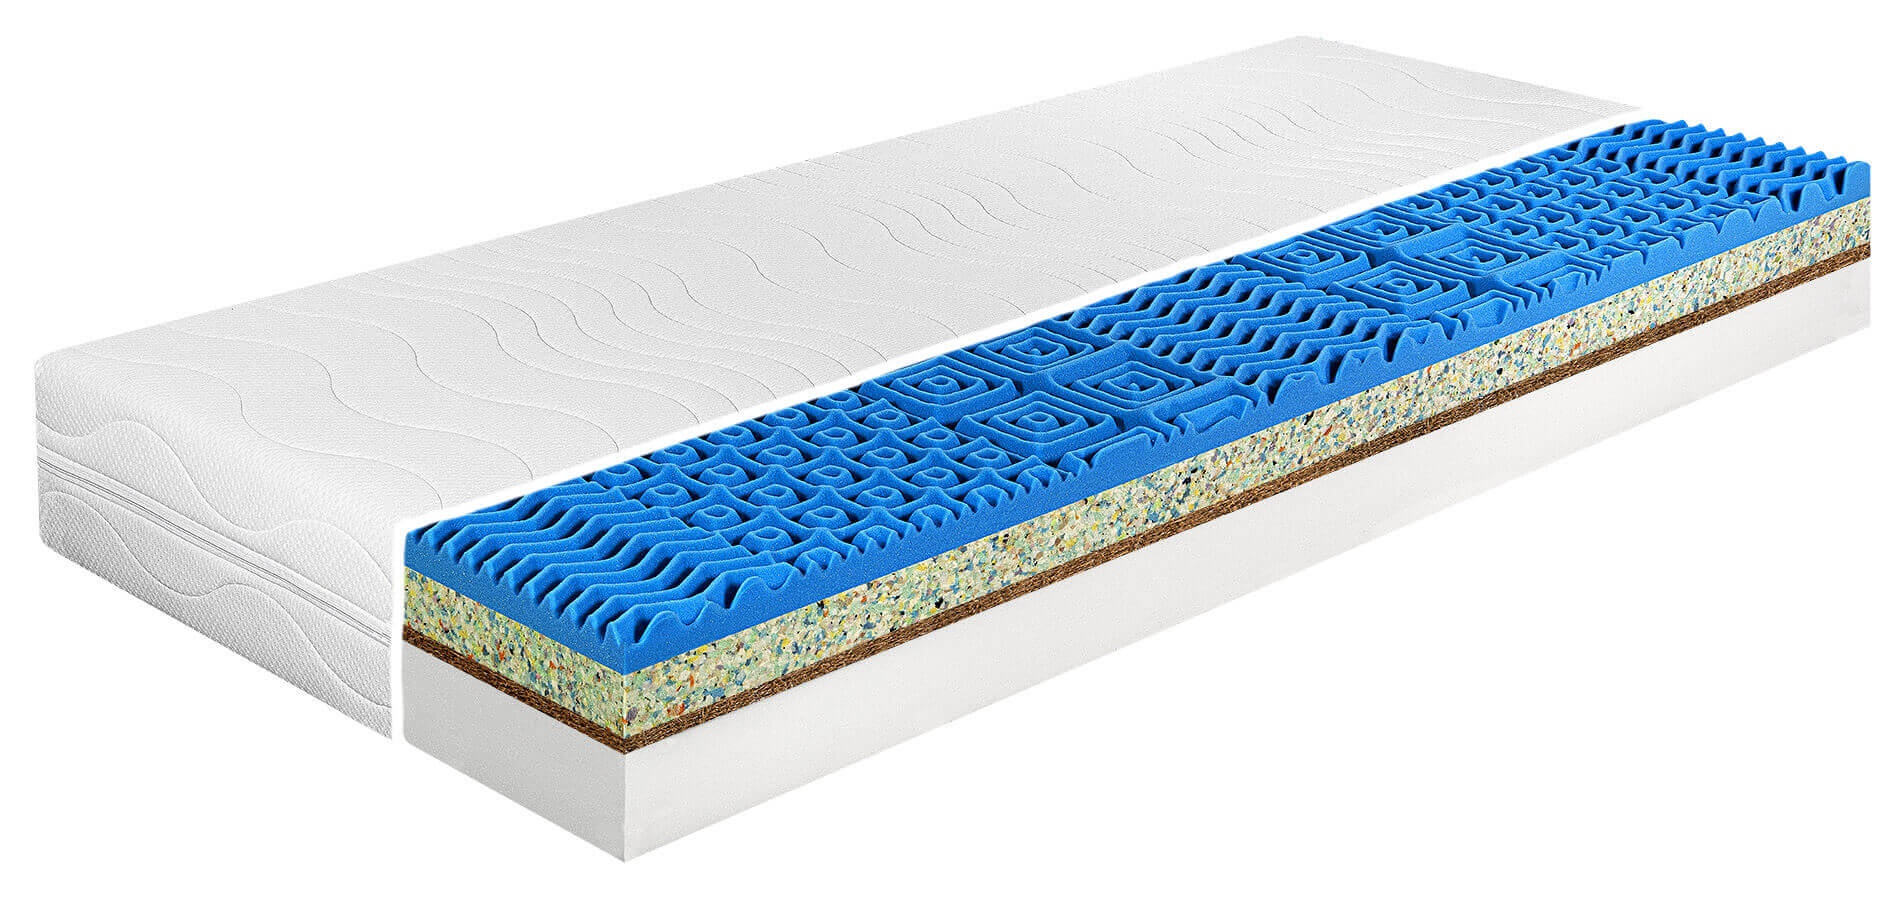 Sendvičová matrace ZEUS PLUS, výška 22 cm Rozměr: 80 x 200 cm, Materiál: chloe aktiv